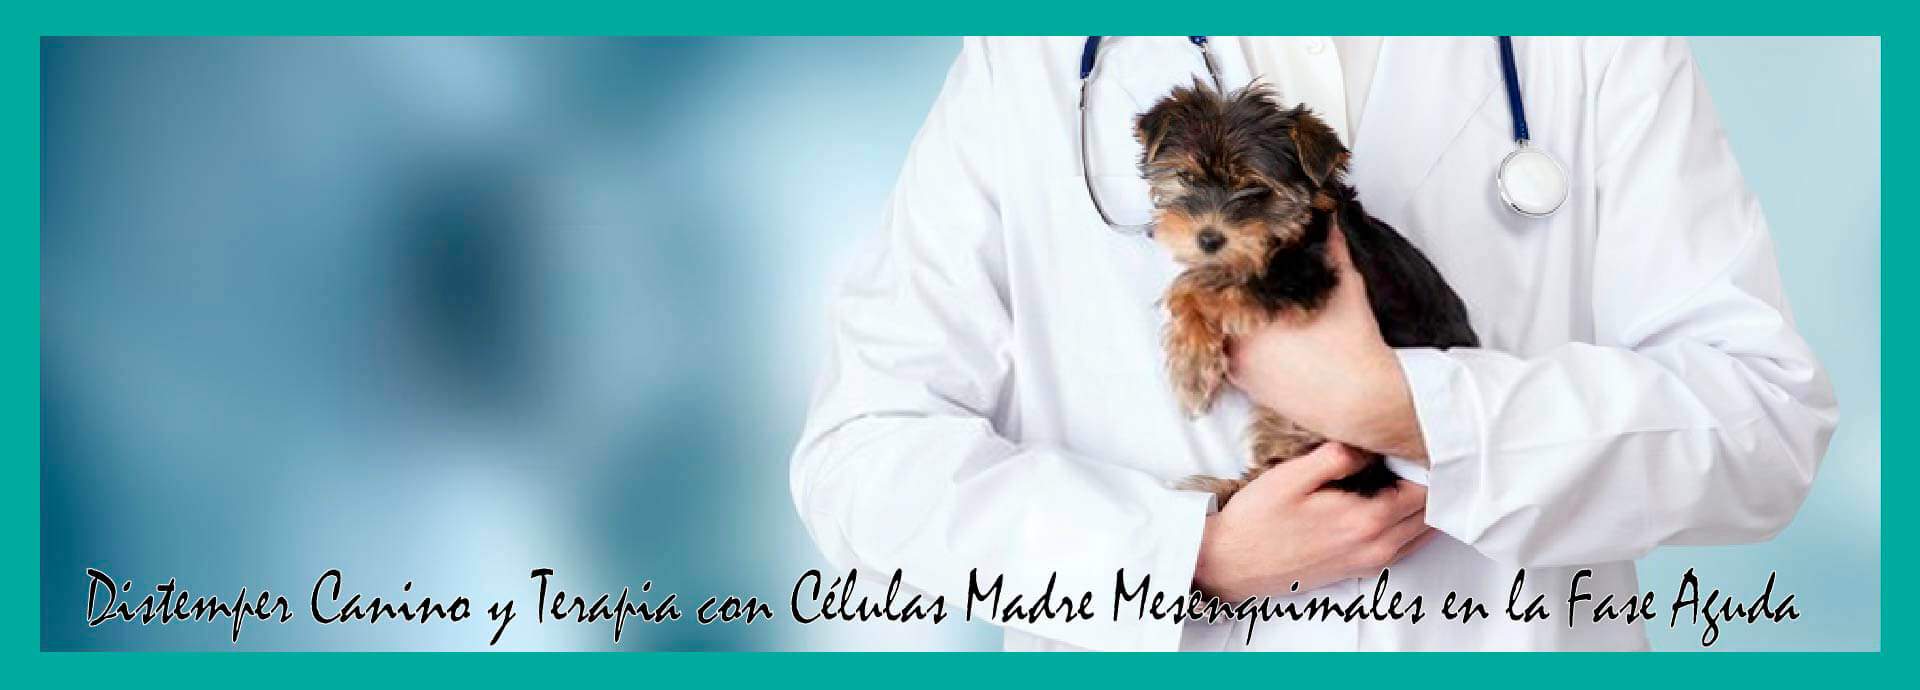 Distemper Canino y Terapia con Células Madre Mesenquimales en la Fase Aguda